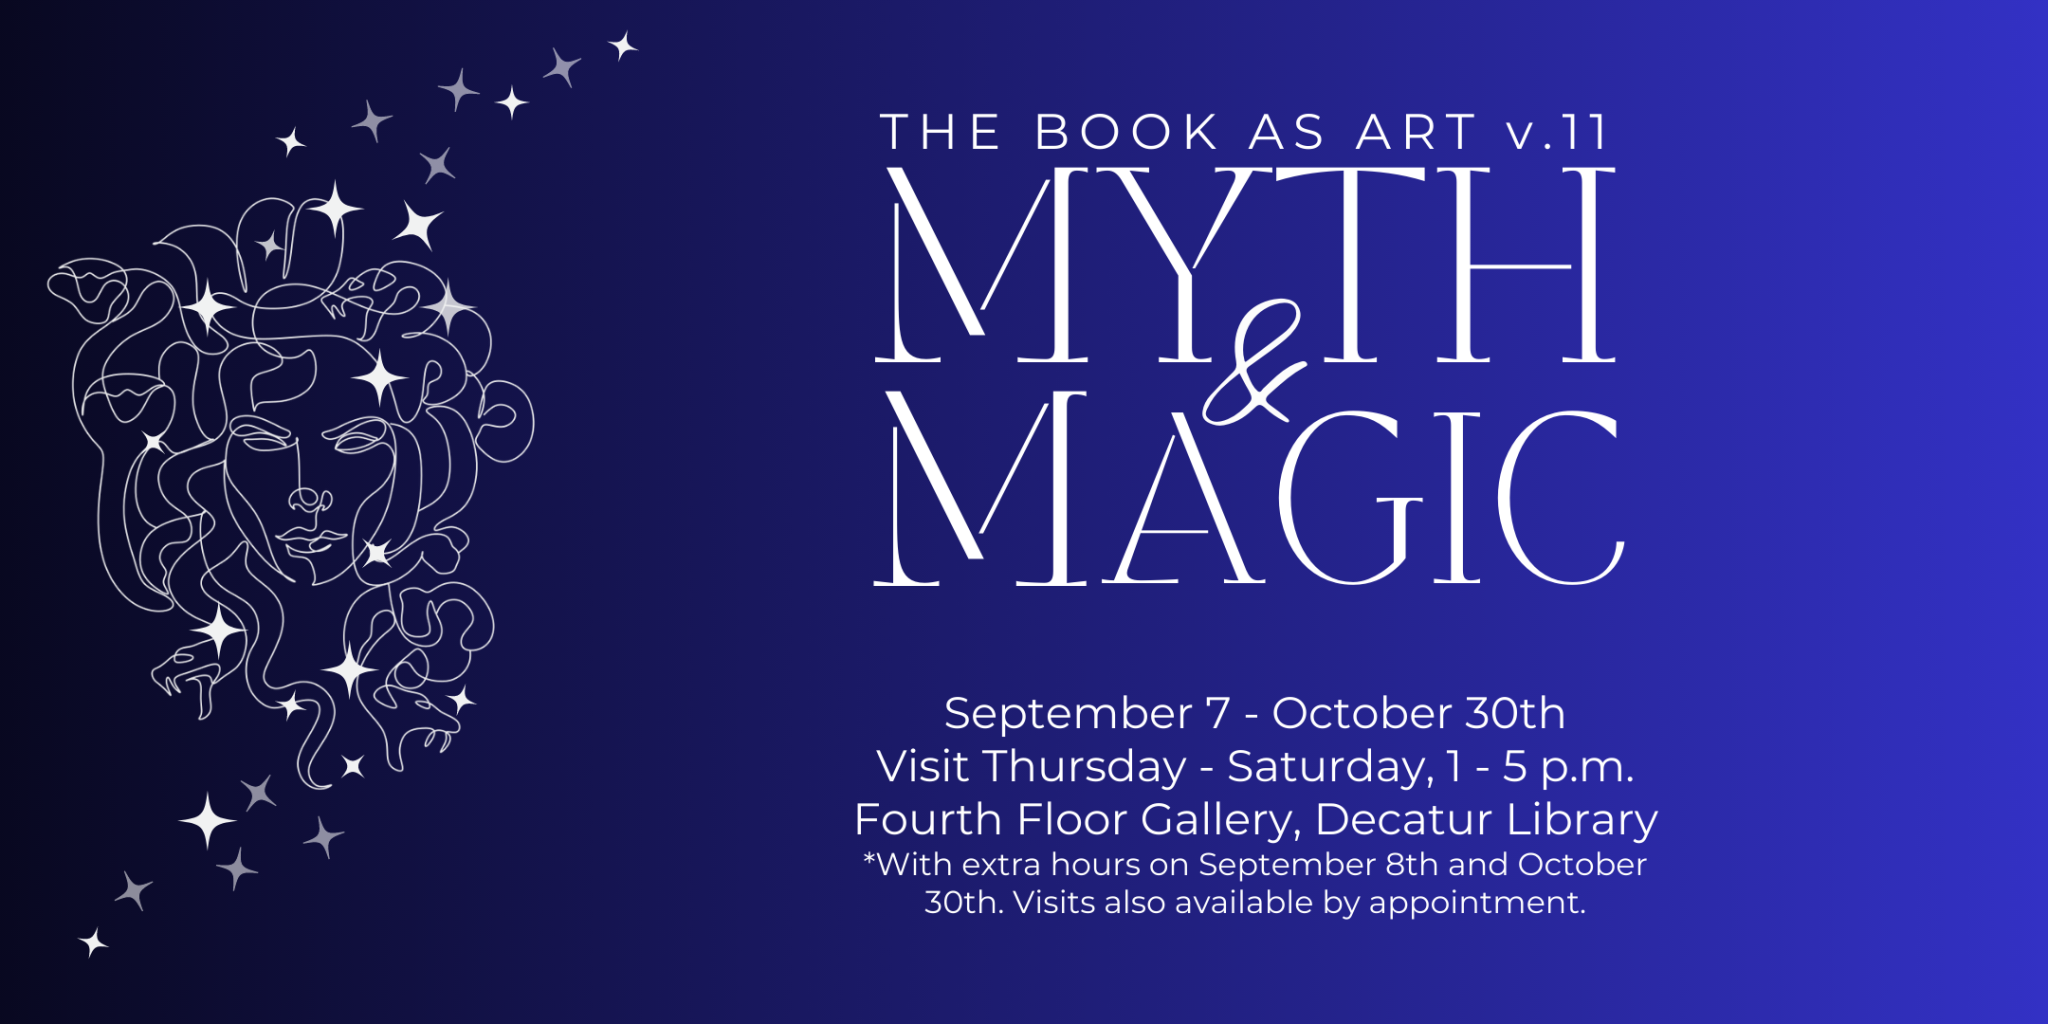 The Book As Art v.11: Myth & Magic